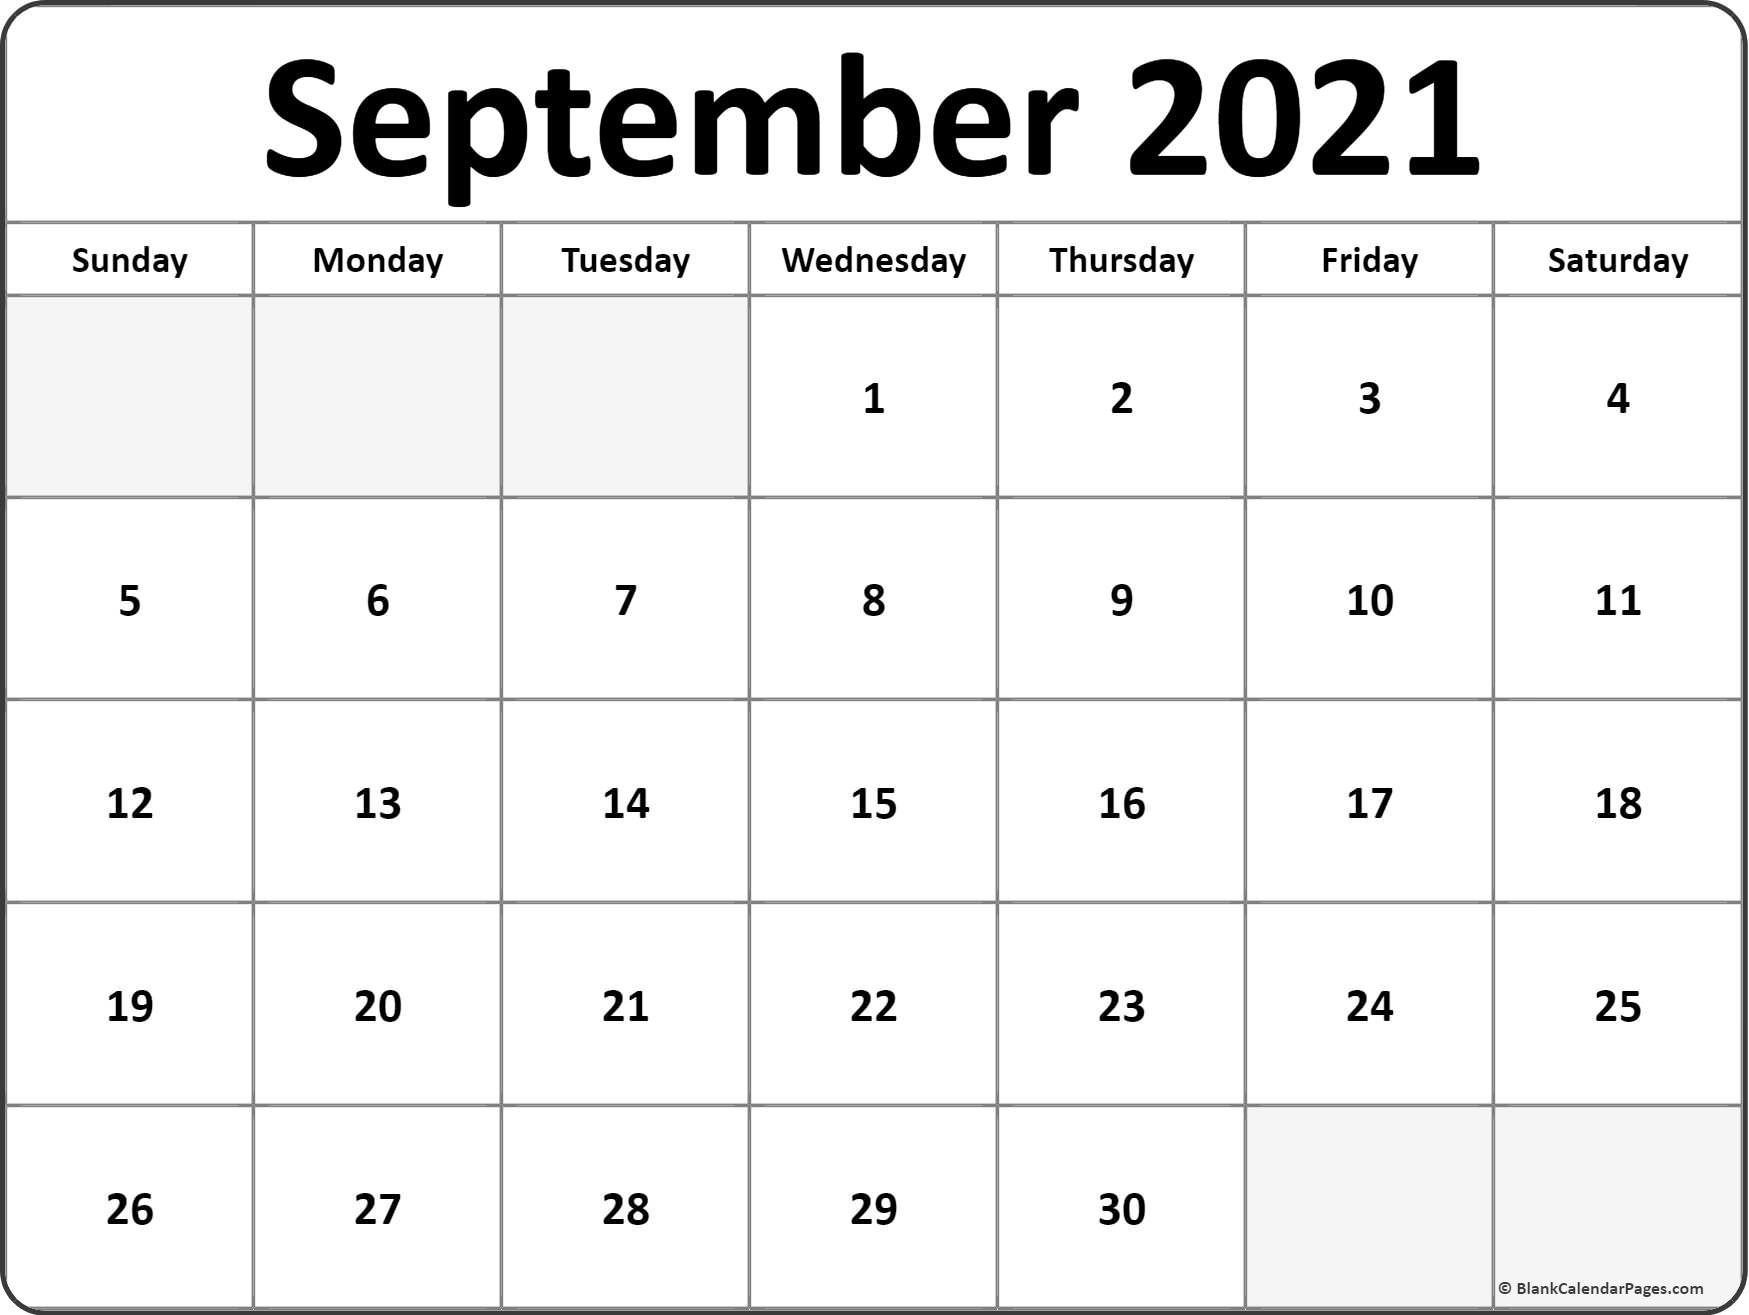 September 2021 Blank Calendar Collection. September 2020 To January 2021 Calendar